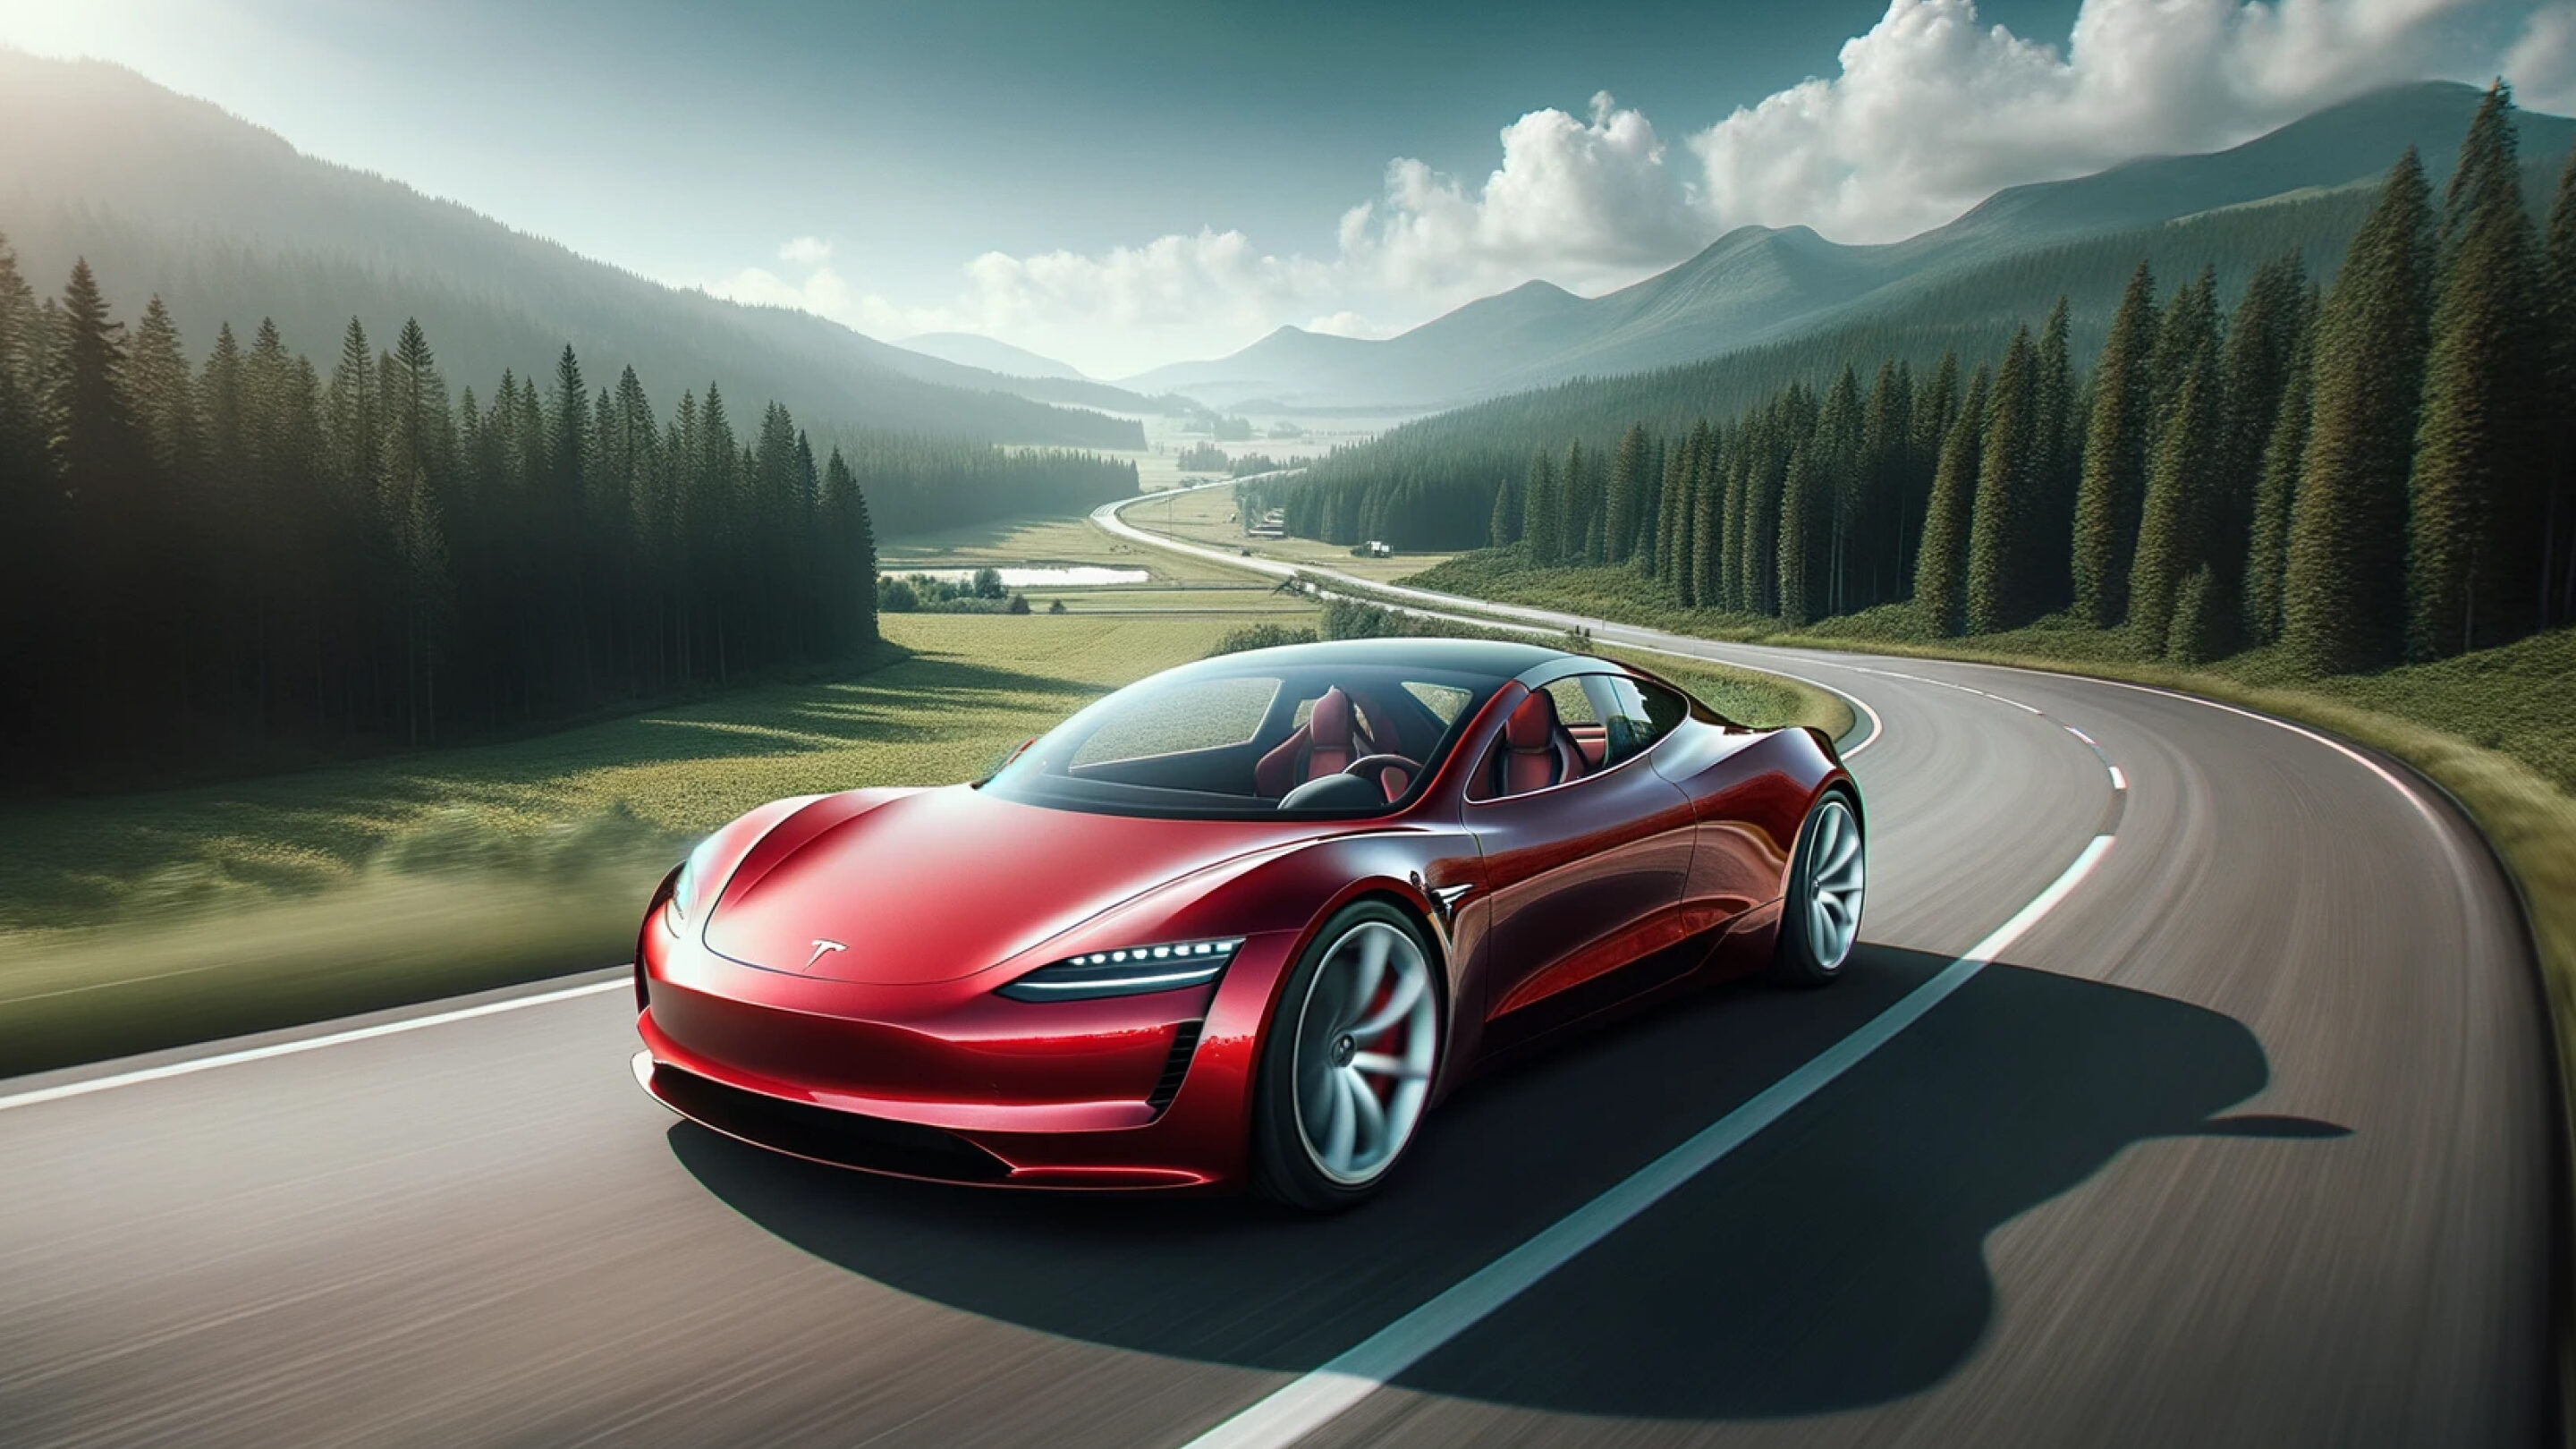 A Tesla Roadster on a road